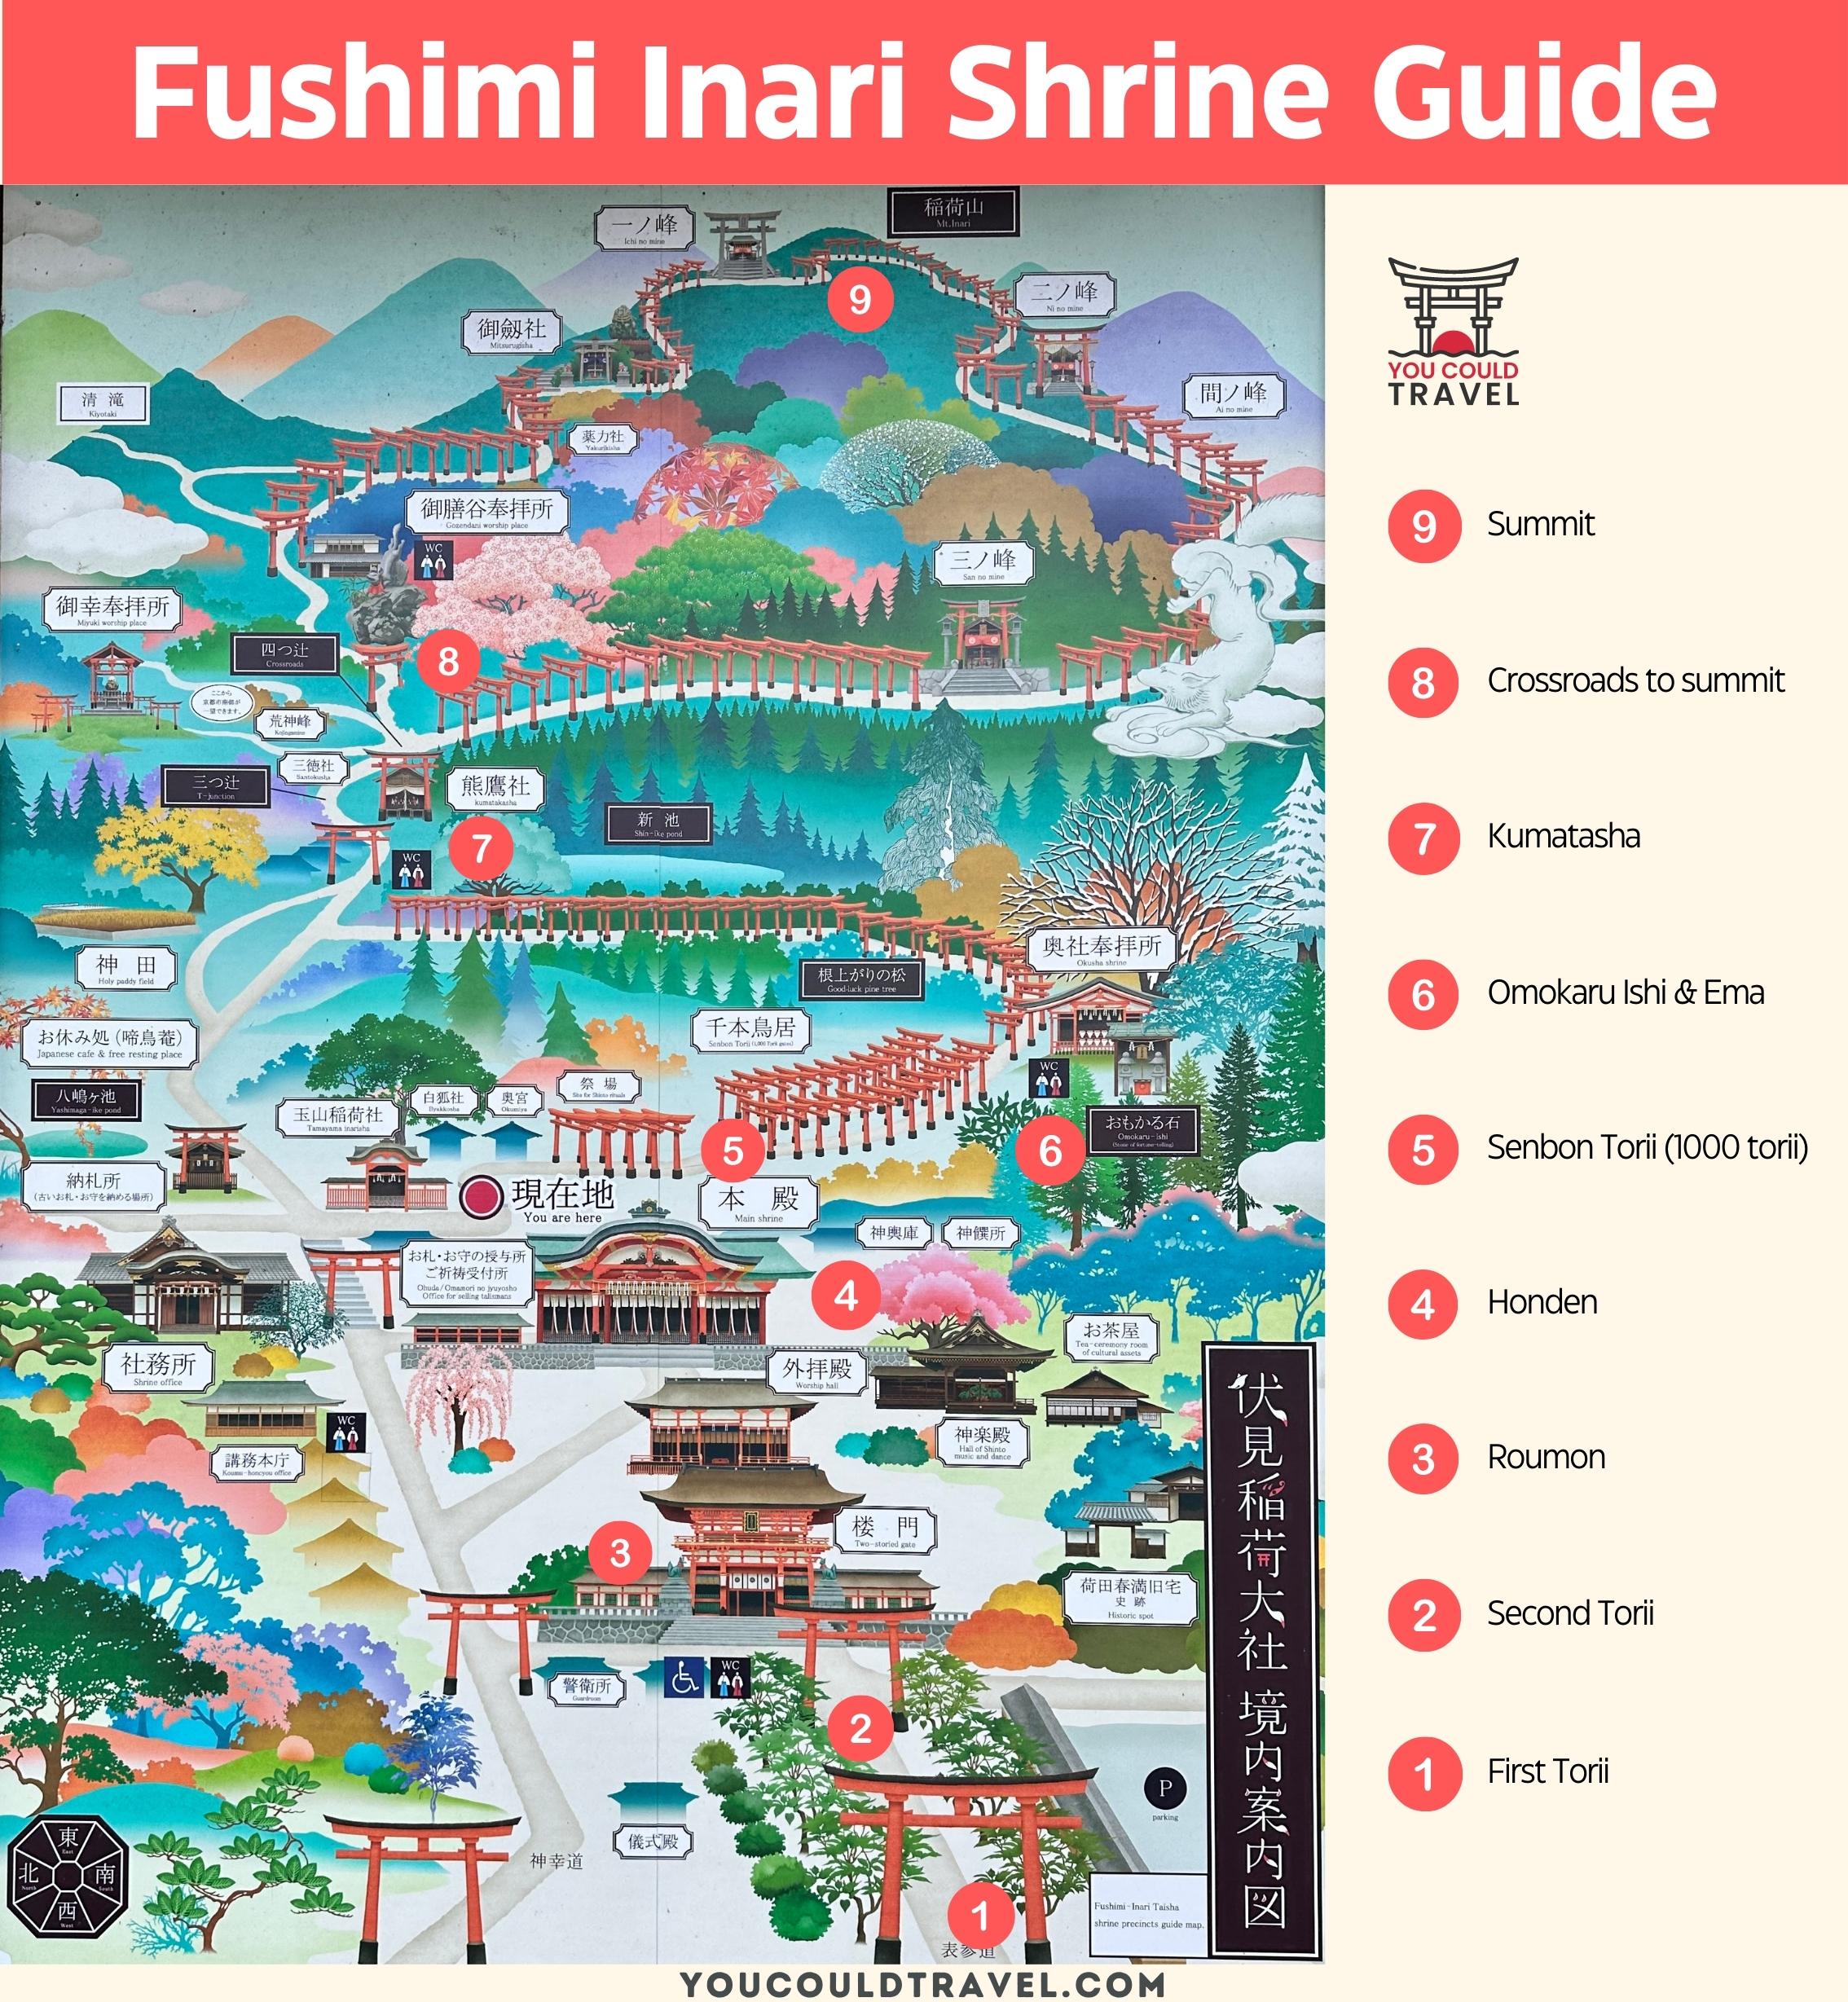 Fushimi Inari shrine complete guide and map